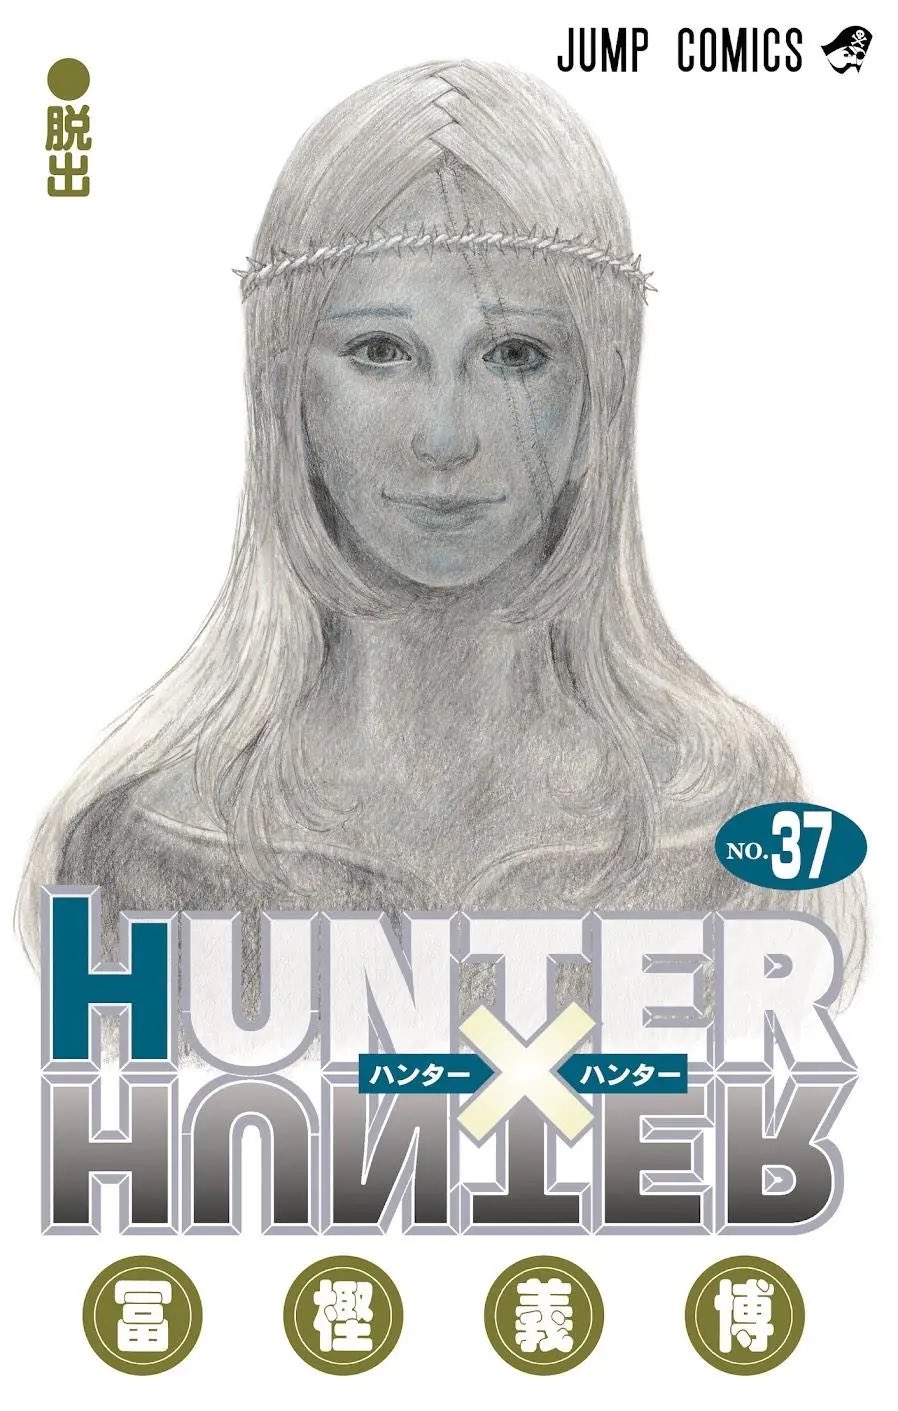 Novo volume e possível retorno de 'Hunter x Hunter' na Shounen